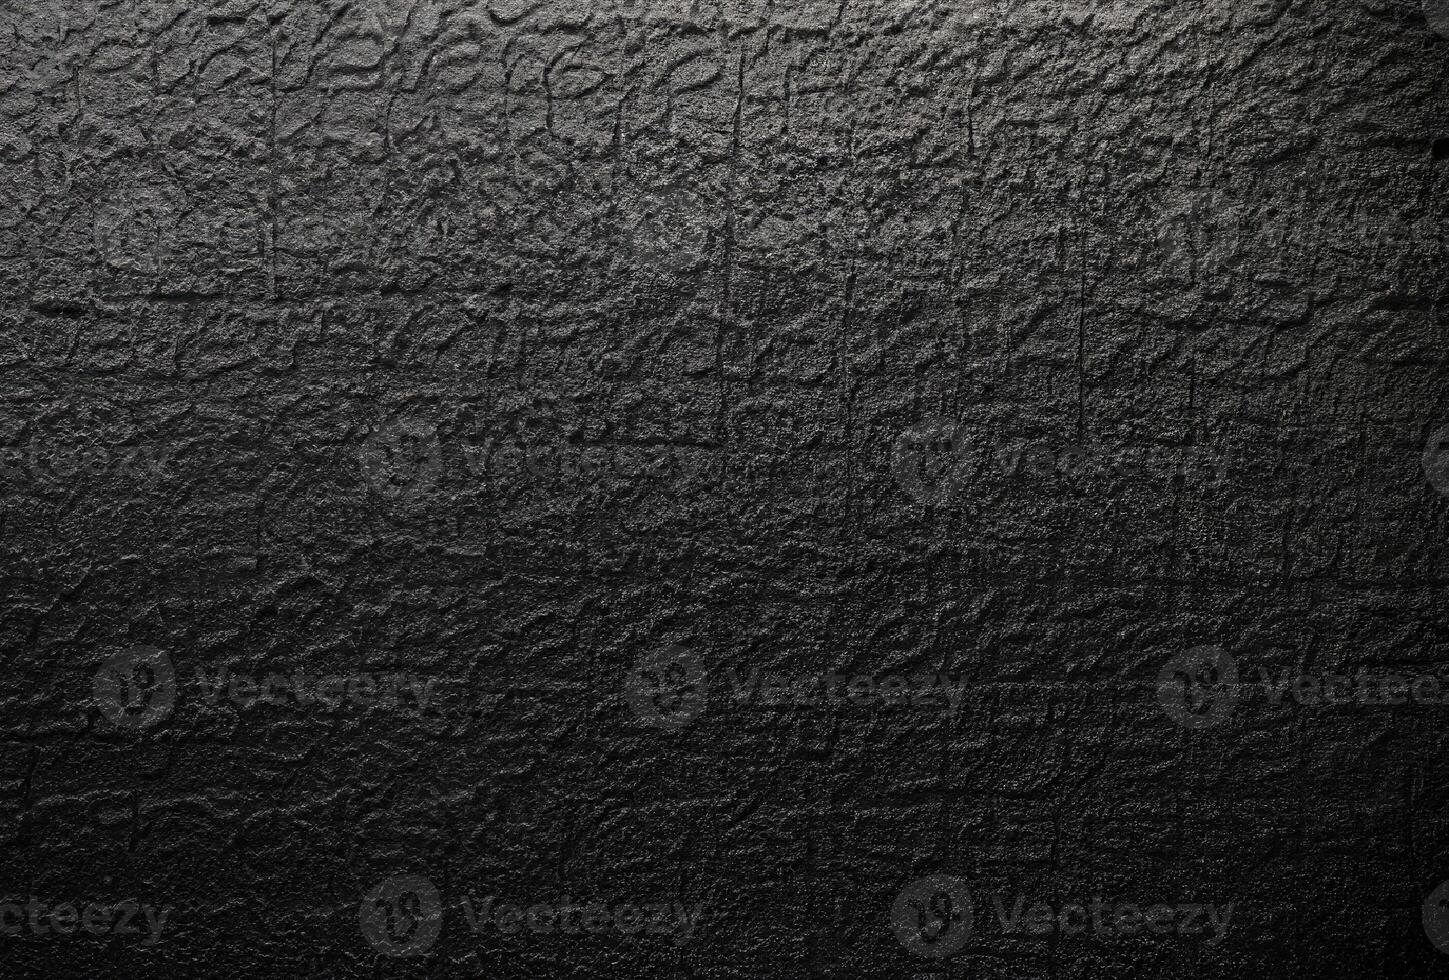 black Wall pattern Design background. photo